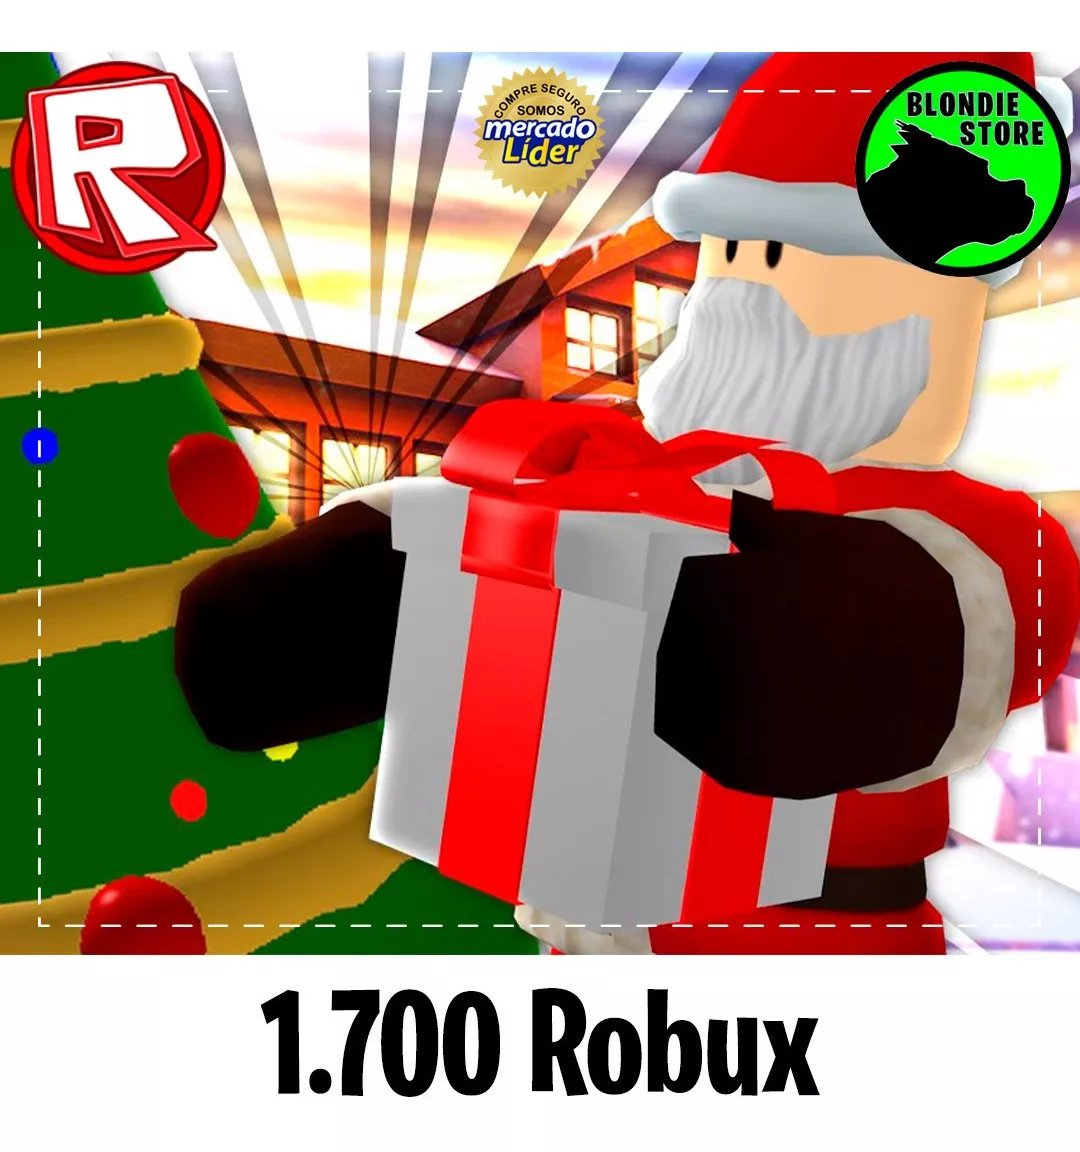 Event Robux Roblox Tomwhite2010 Com - como conseguir ropa gratis evento roblox halloween 2018